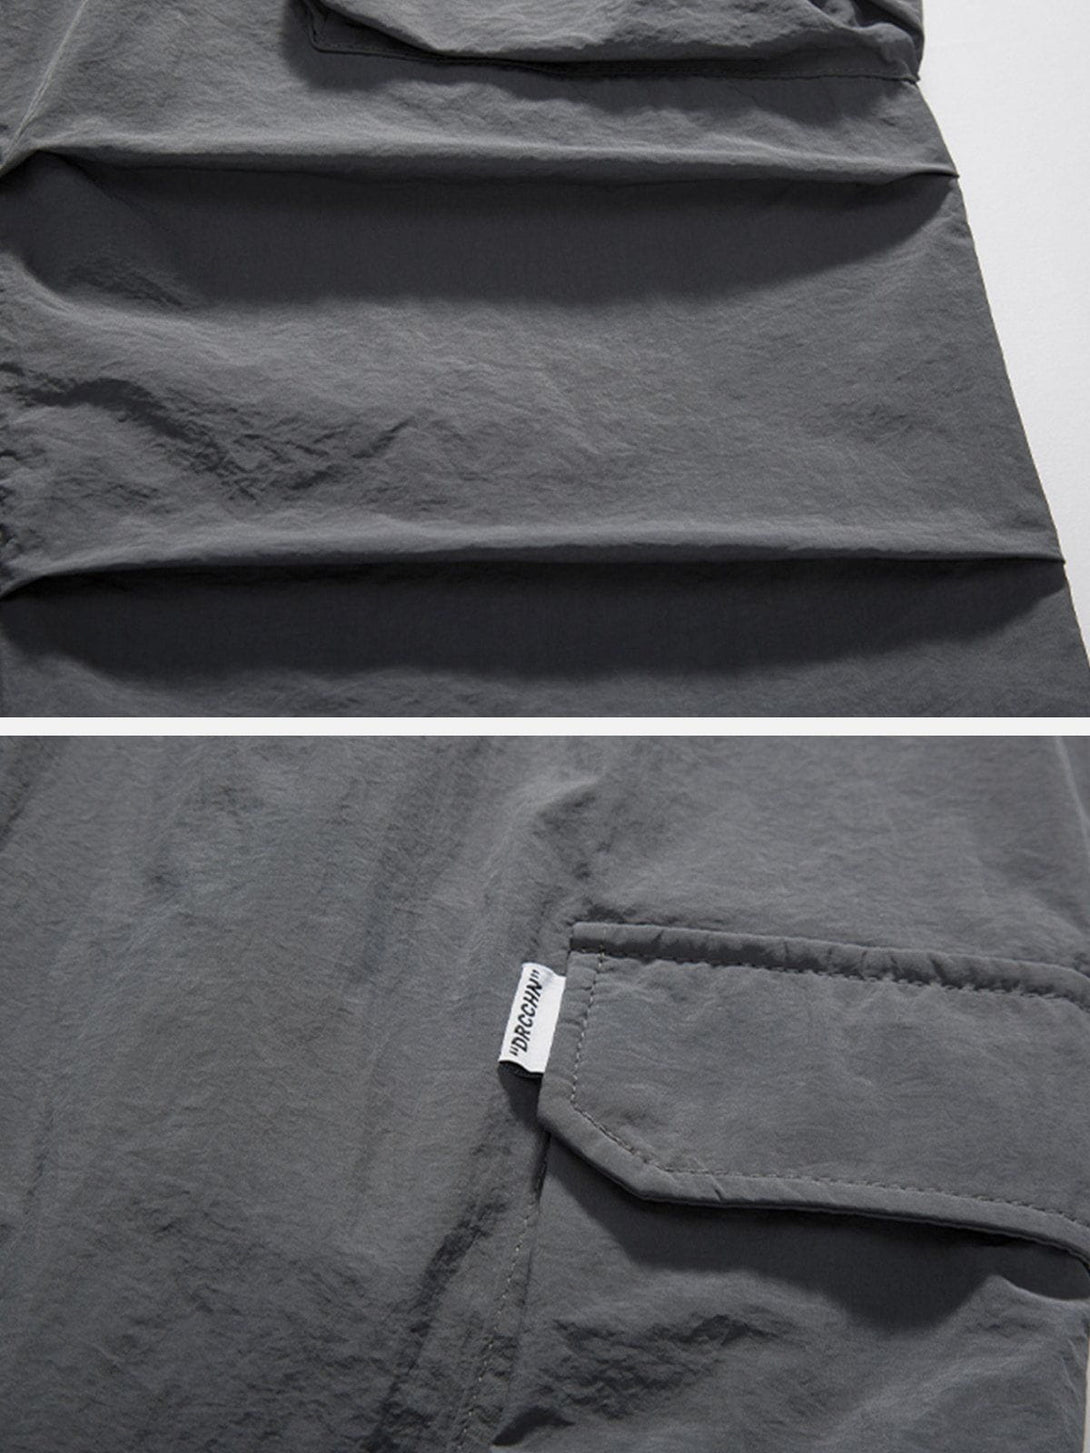 Levefly - Zip Multi-Pocket Cargo Pants - Streetwear Fashion - levefly.com